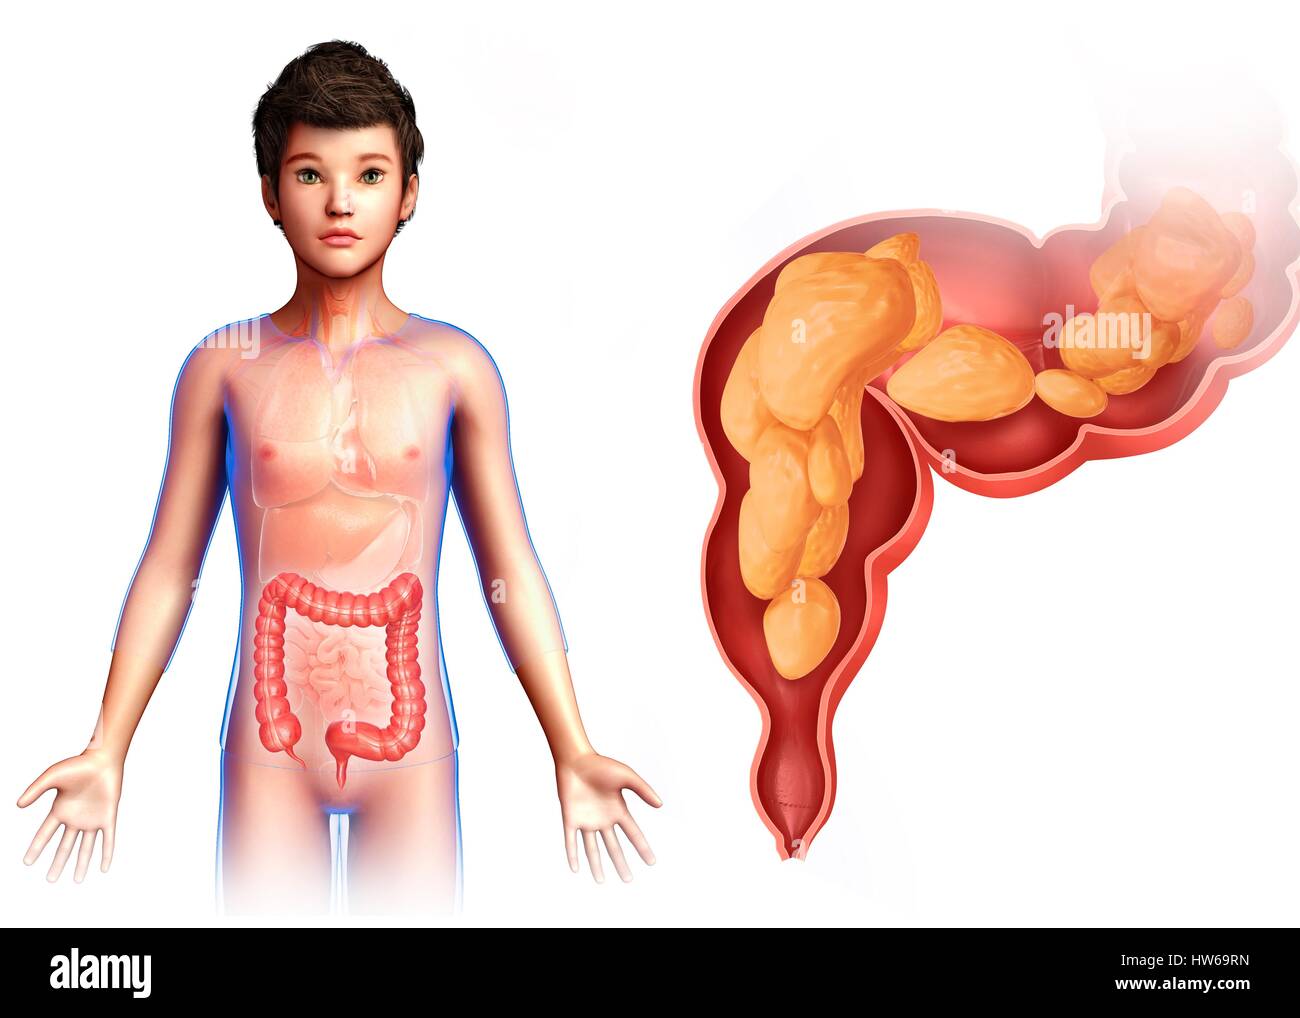 Illustration of a child's rectum. Stock Photo